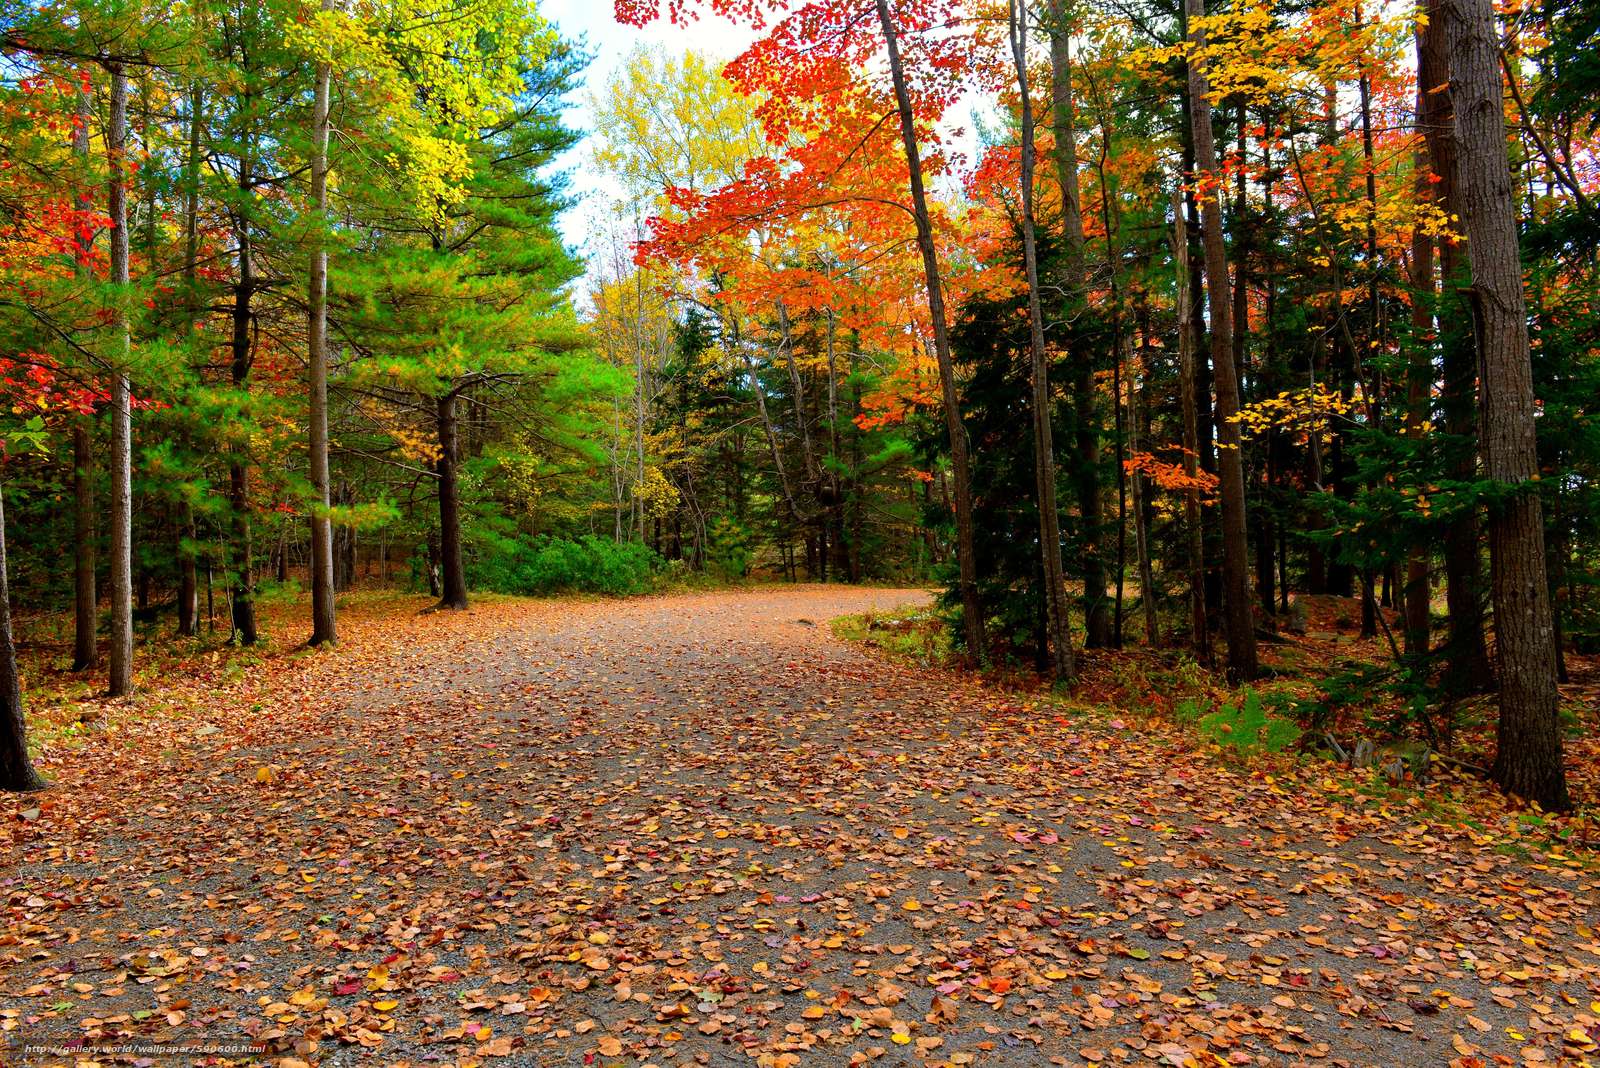 Download wallpaper Acadia National Park, autumn, road, trees free